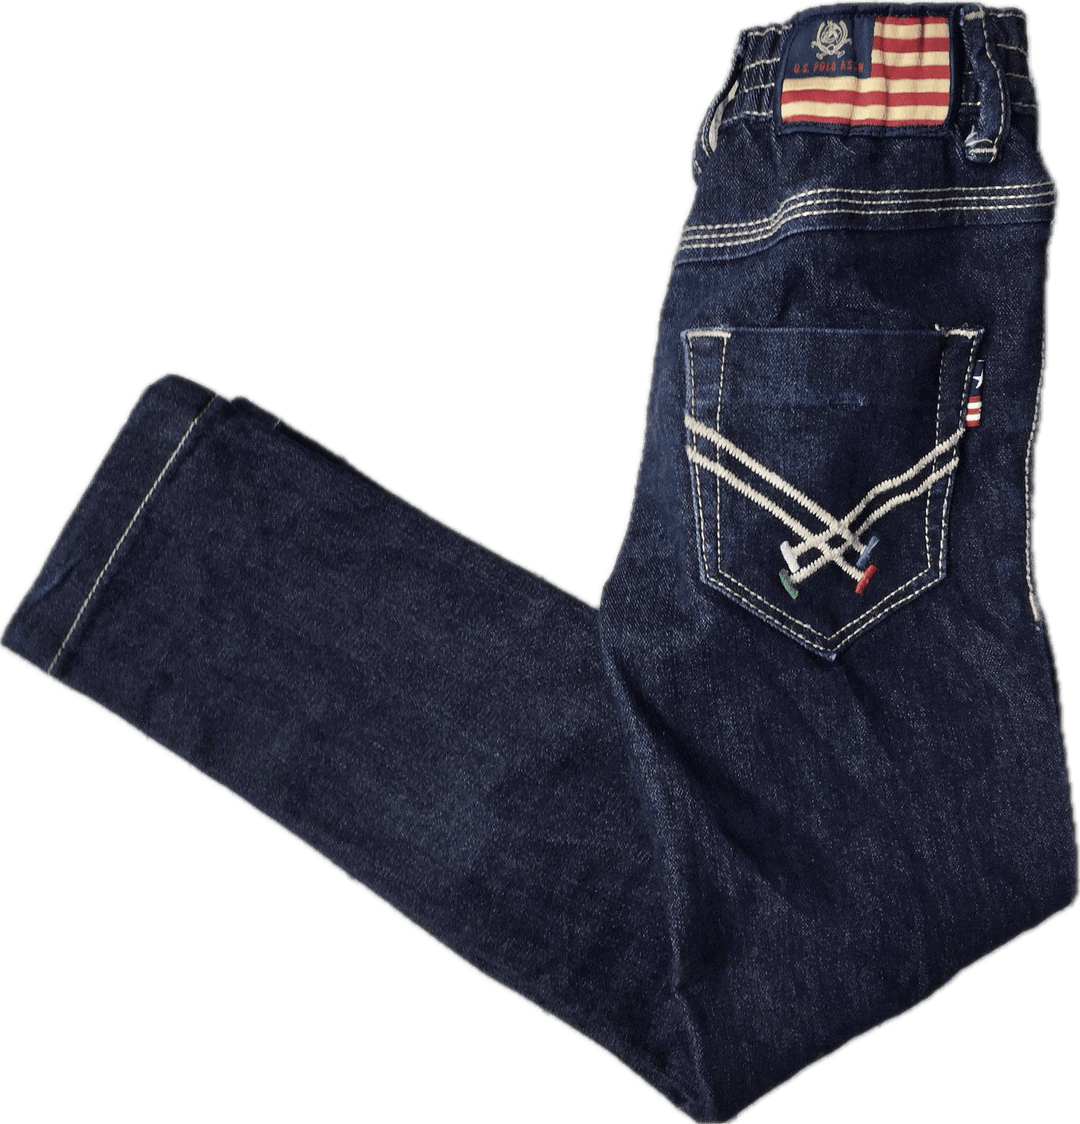 US Polo Assn. Boys Jeans - Size 6/7 - Jean Pool